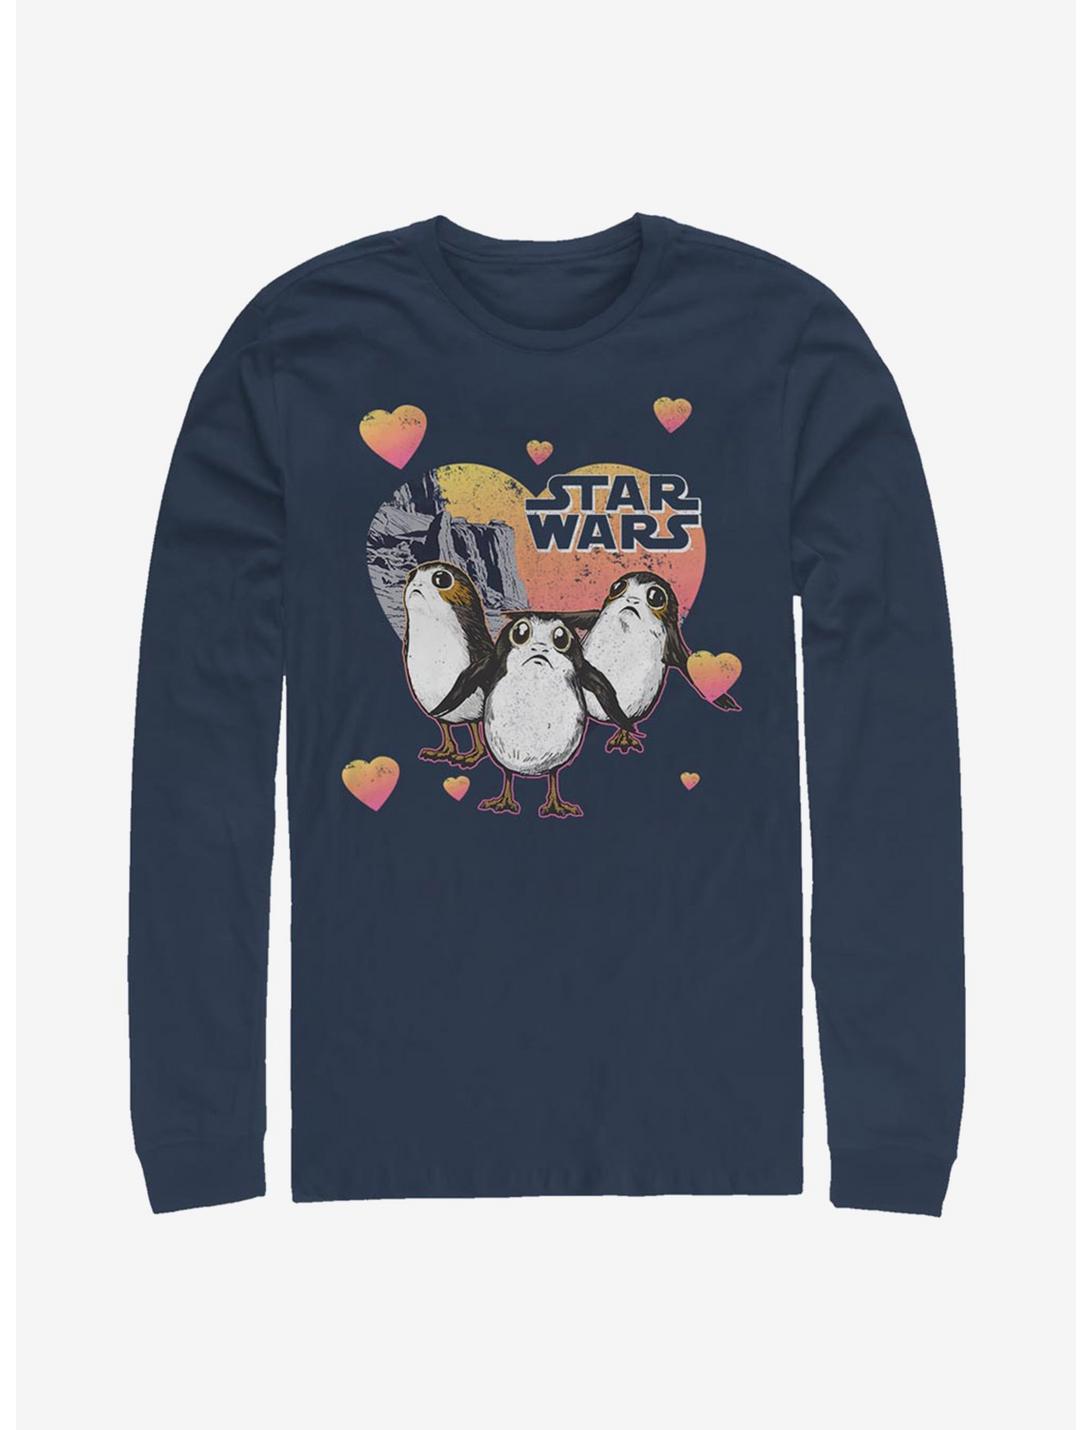 Star Wars Porg Hearts Long-Sleeve T-Shirt, NAVY, hi-res